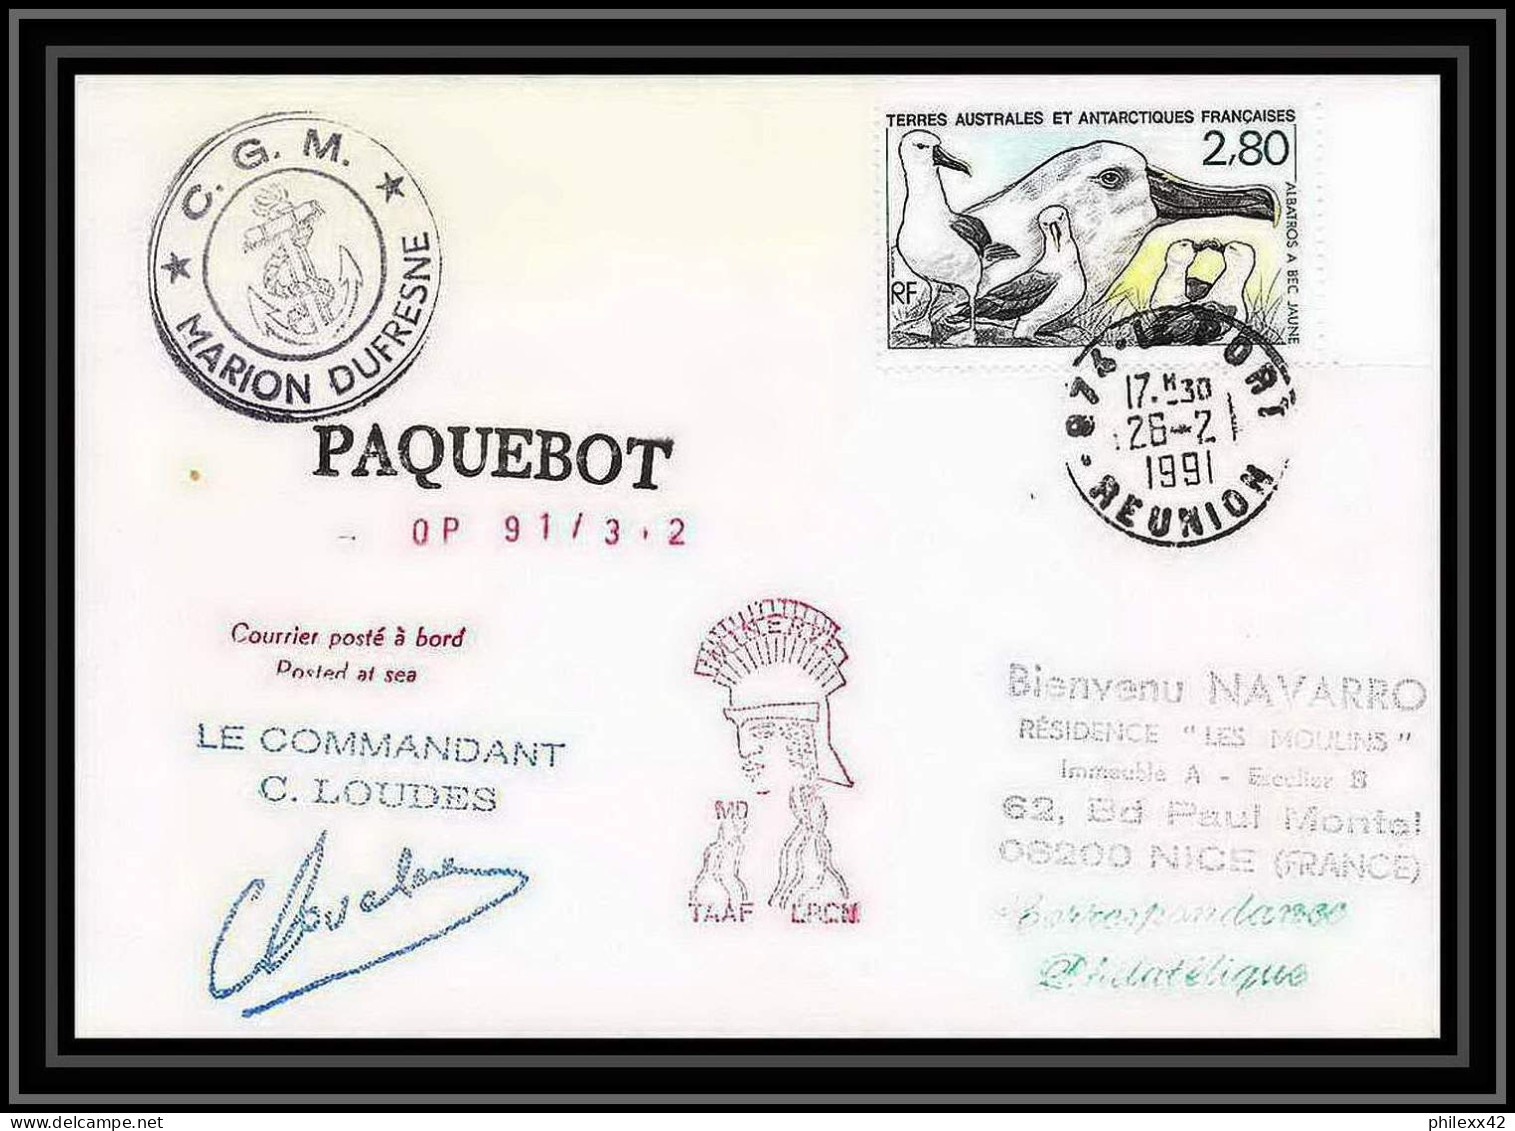 1769 Op 91-3-2 Signé Signed Loudes 26/2/1991 La Reunion Marion Dufresne TAAF Antarctic Terres Australes Lettre (cover) - Covers & Documents